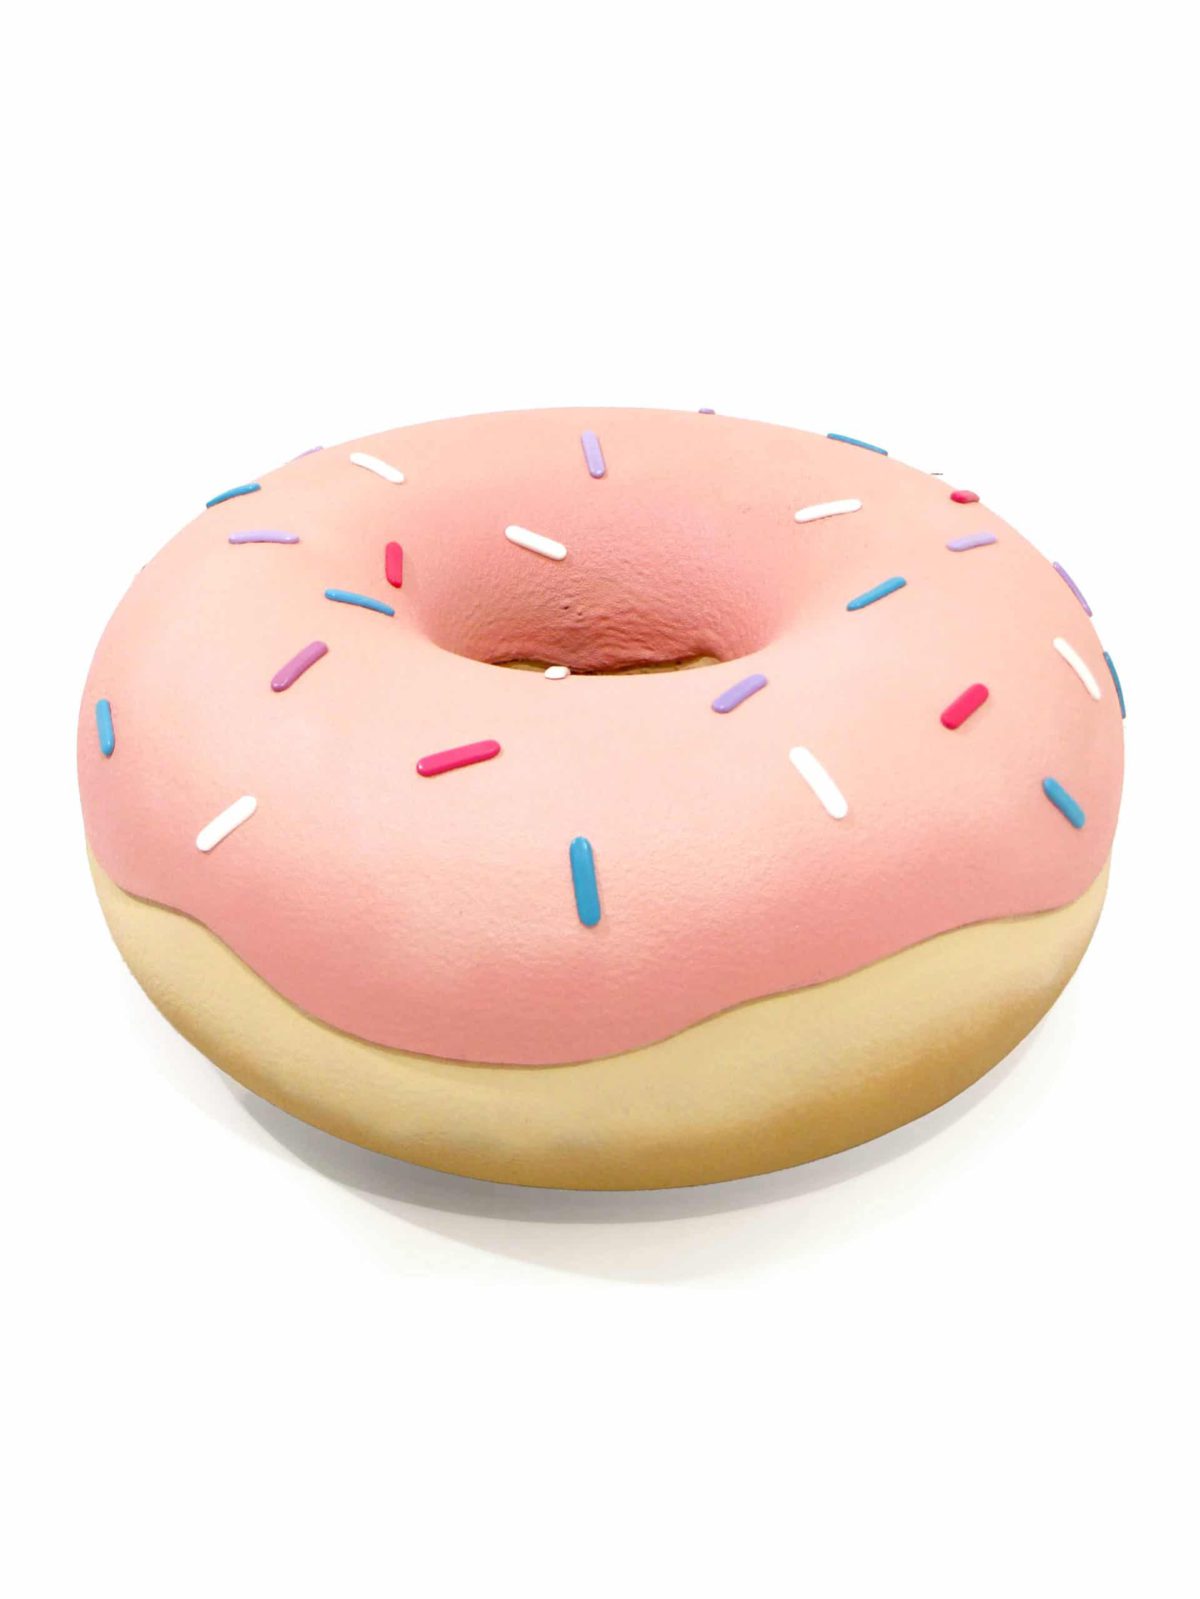 Giant Doughnut - Light Pastel Pink